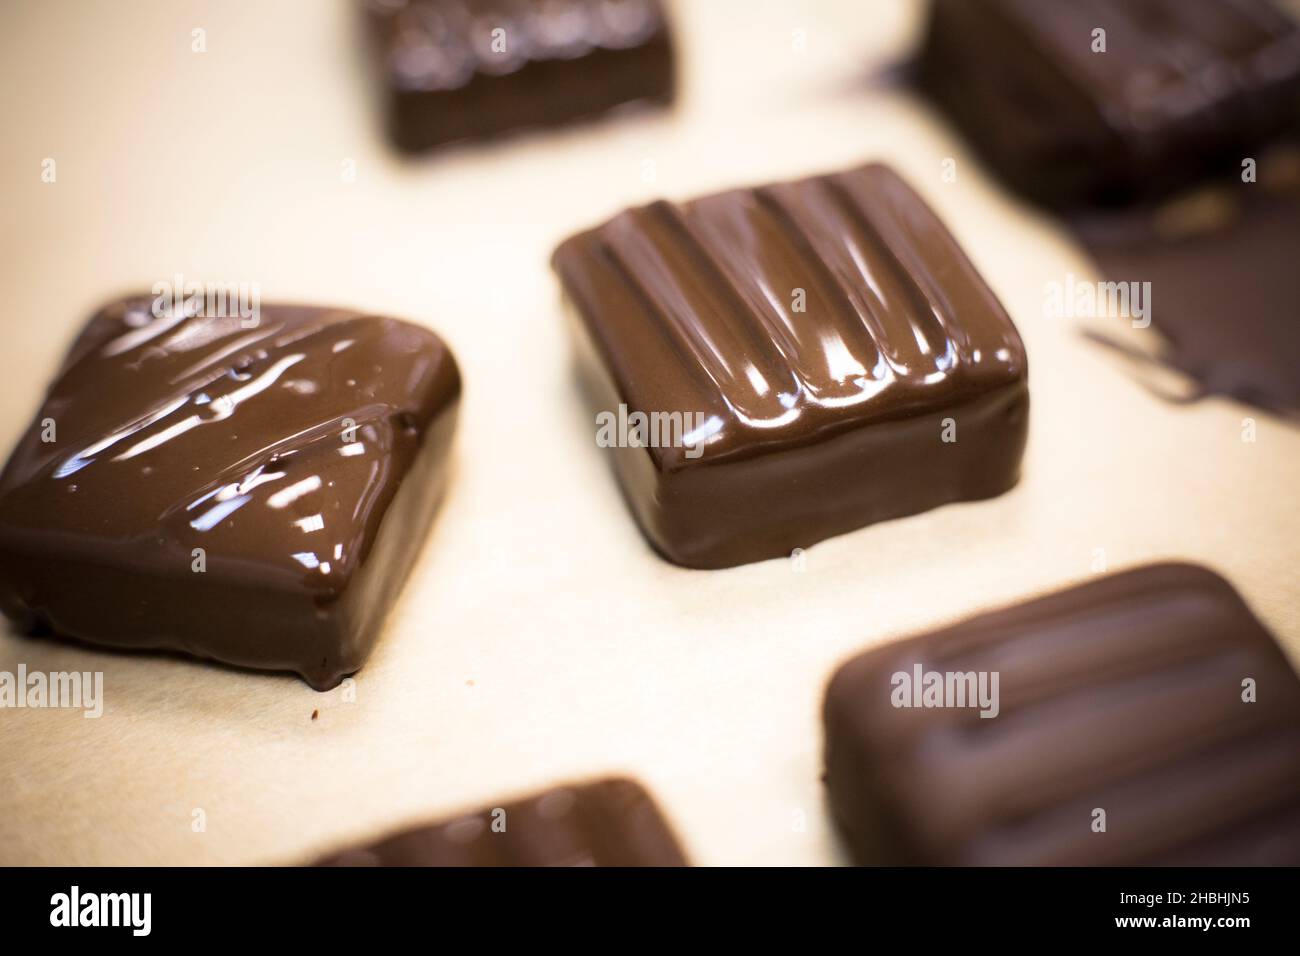 Hand Made Chocolate bonbons Stock Photo